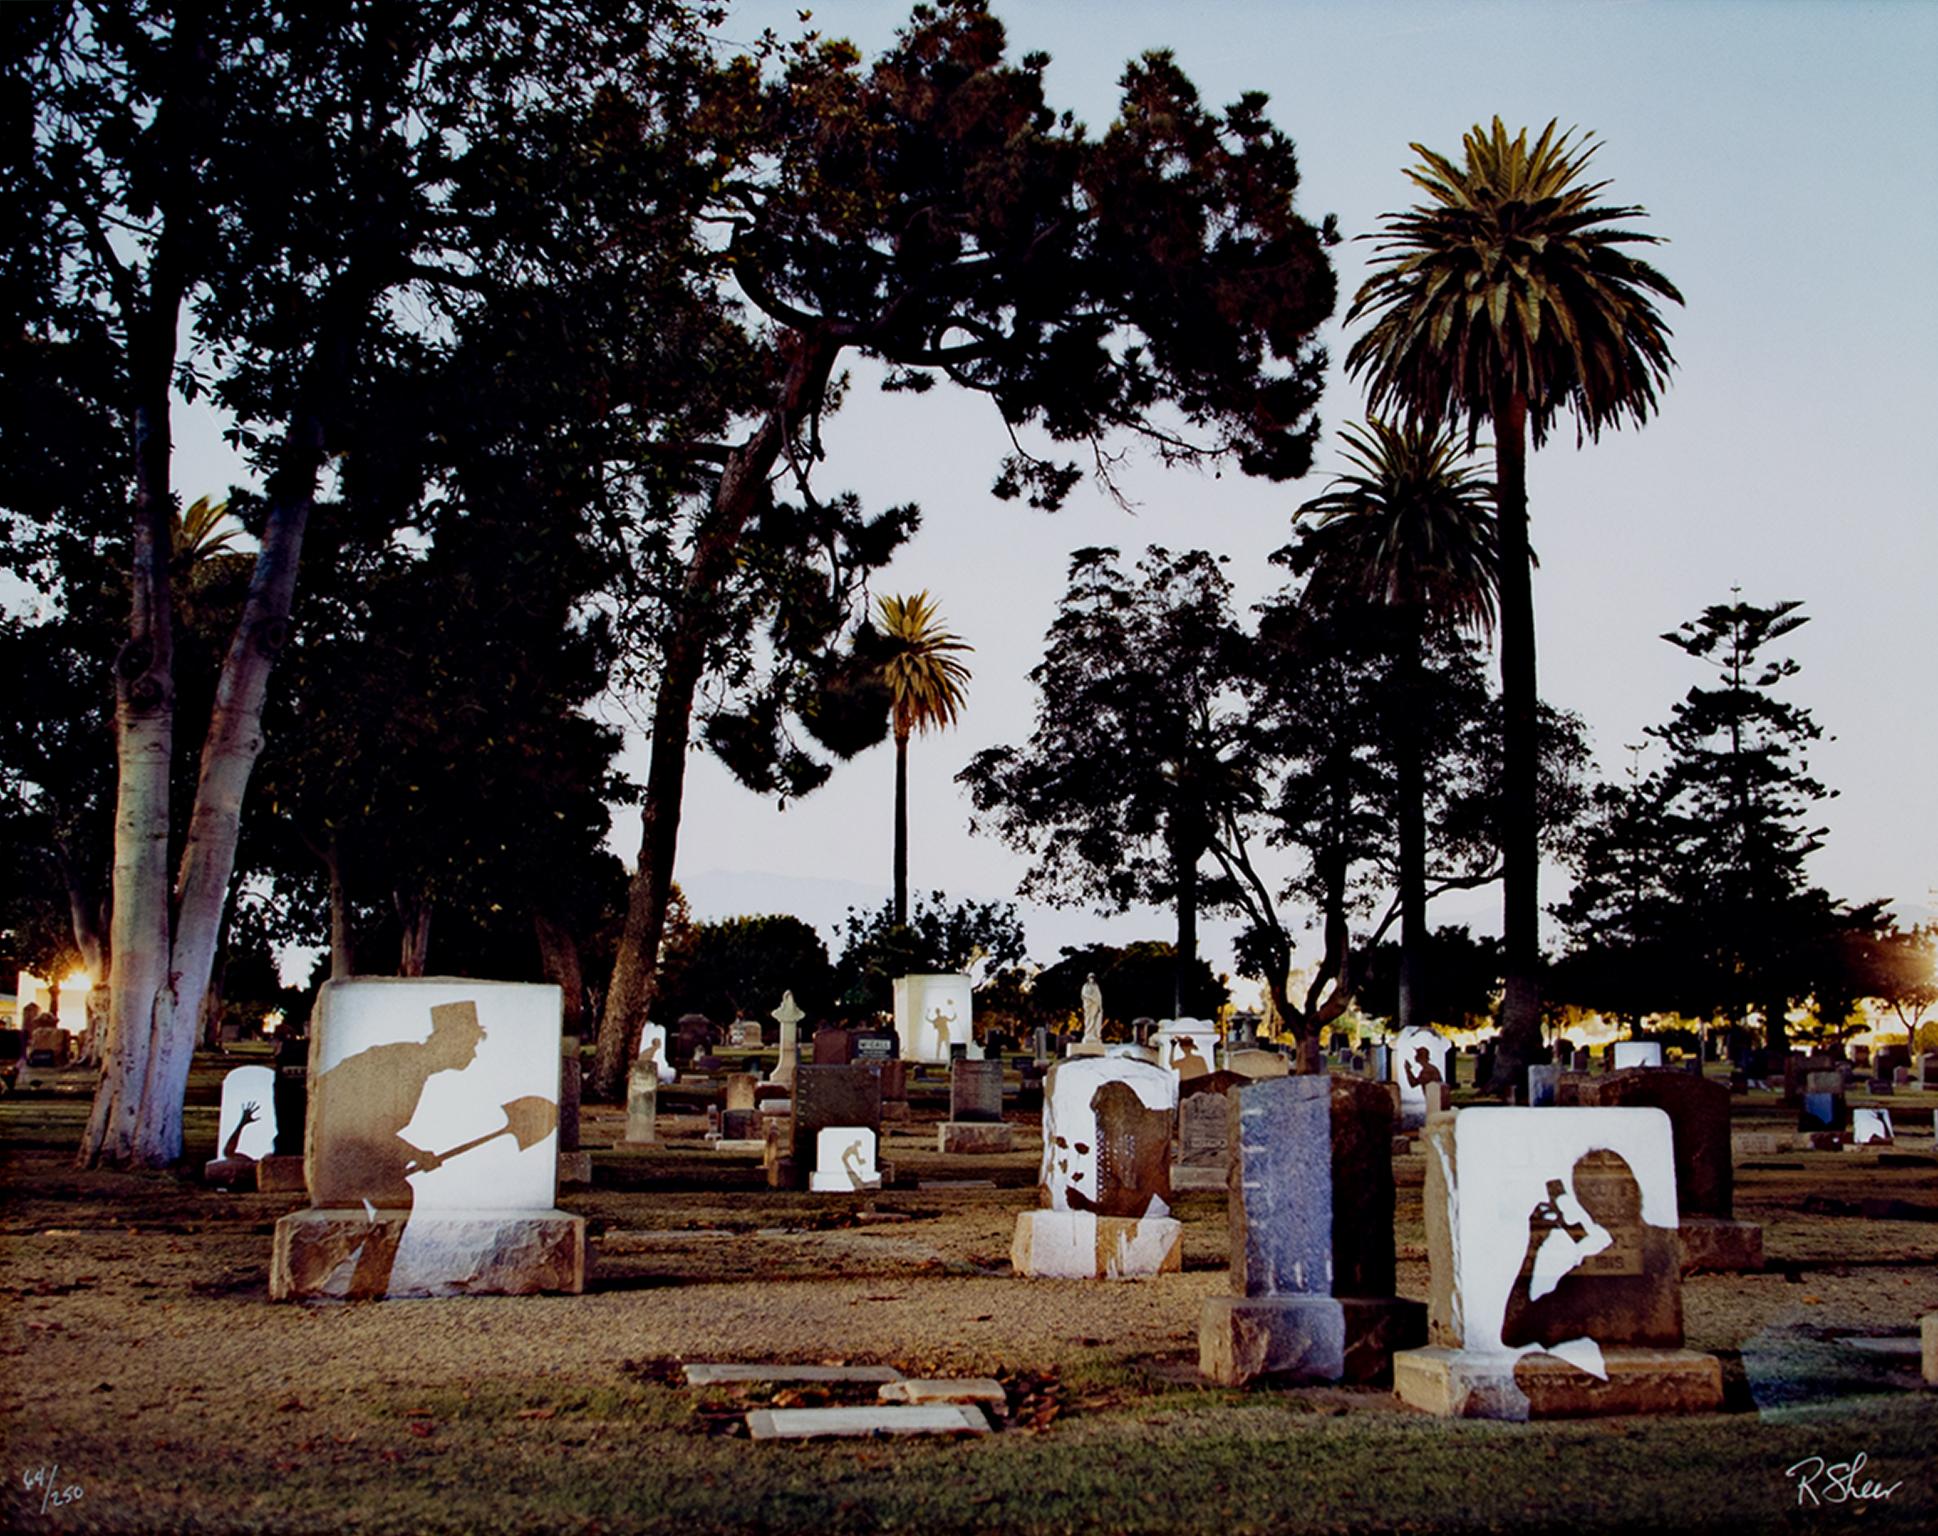 "Graveyard Spirits, " Performance Photography signed by Robert Kawika Sheer